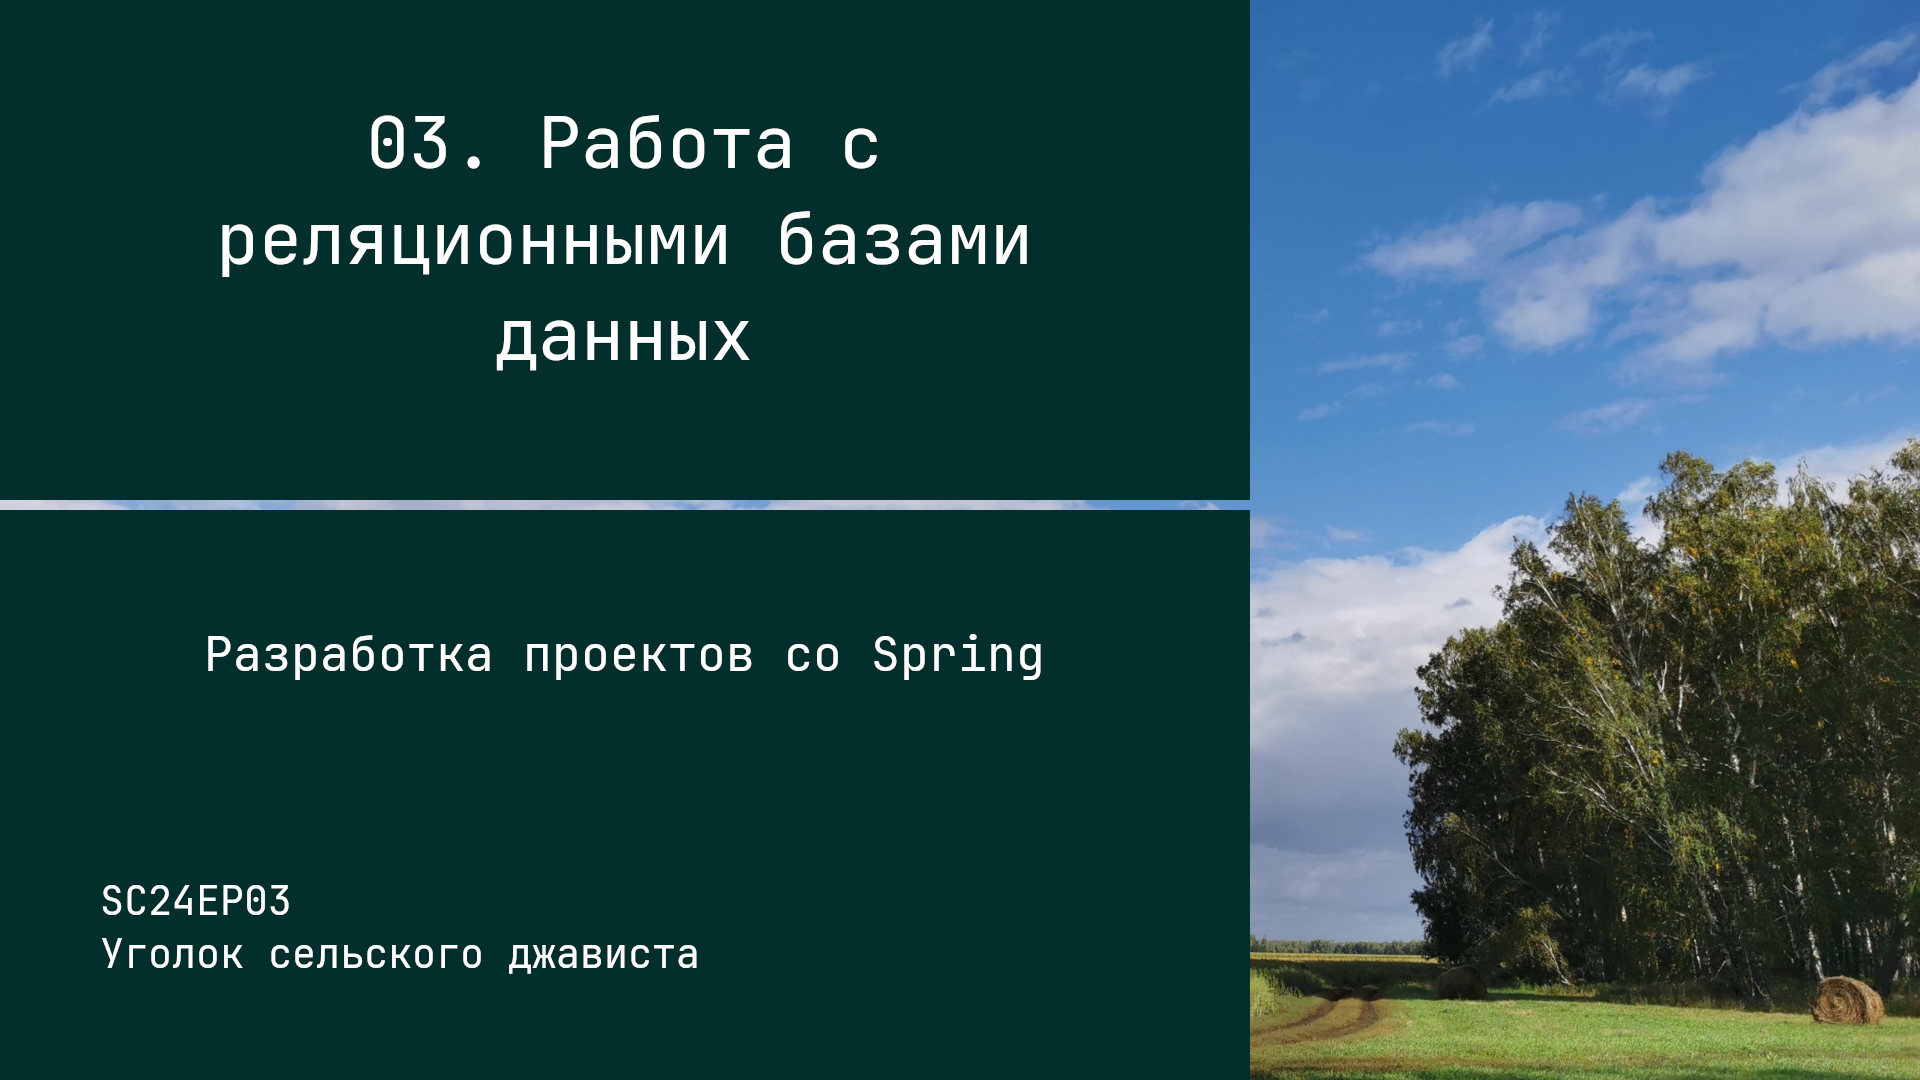 SC24EP03 Работа с базами данных - Разработка проектов со Spring #java #spring #data #jpa #sql